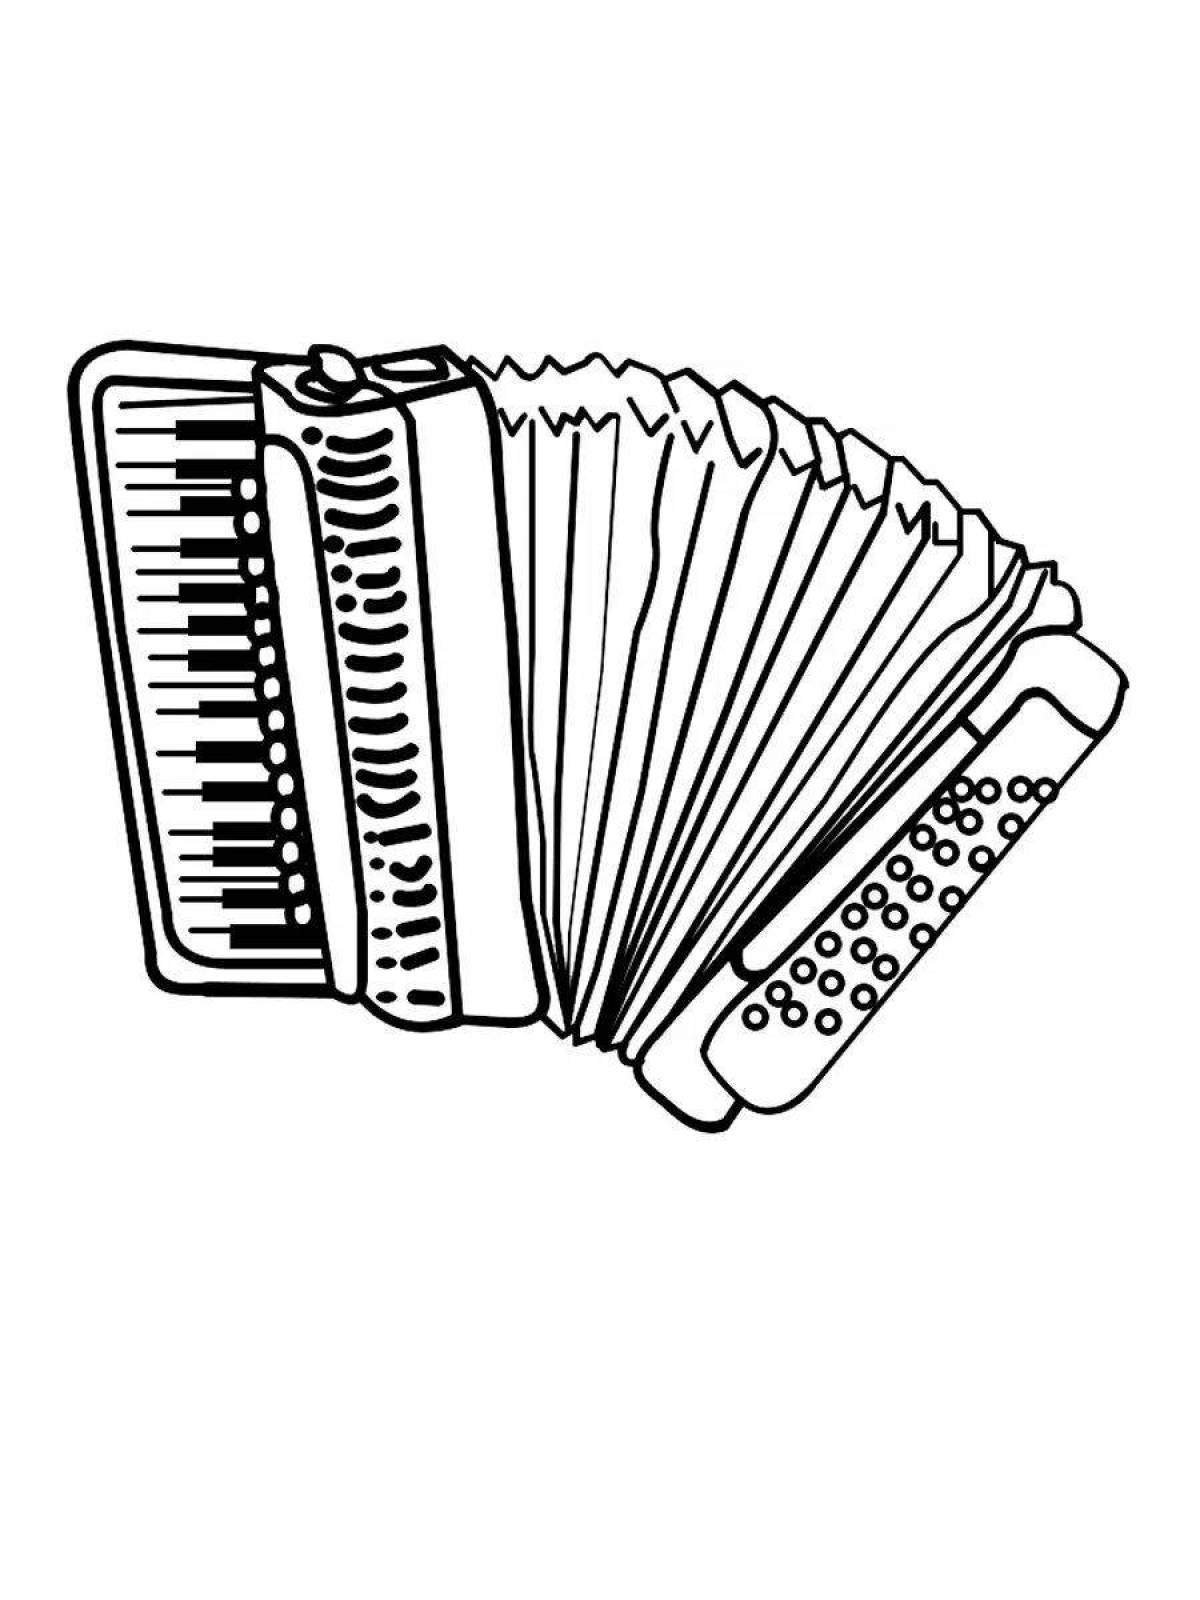 A fun accordion coloring book for kids